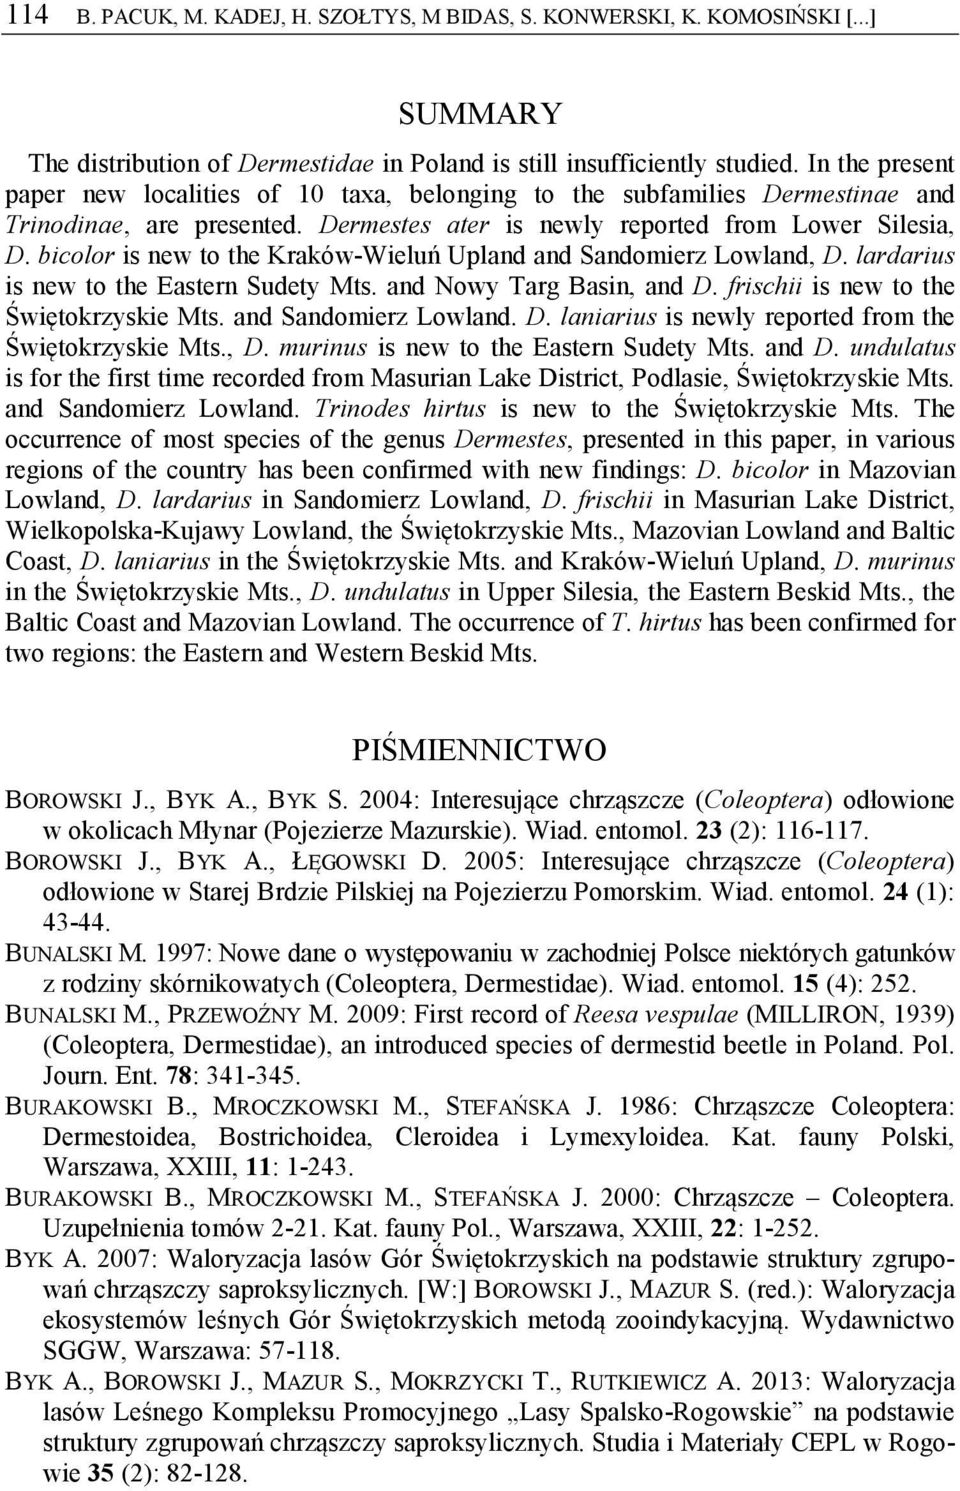 bicolor is new to the Kraków-Wieluń Upland and Sandomierz Lowland, D. lardarius is new to the Eastern Sudety Mts. and Nowy Targ Basin, and D. frischii is new to the Świętokrzyskie Mts.